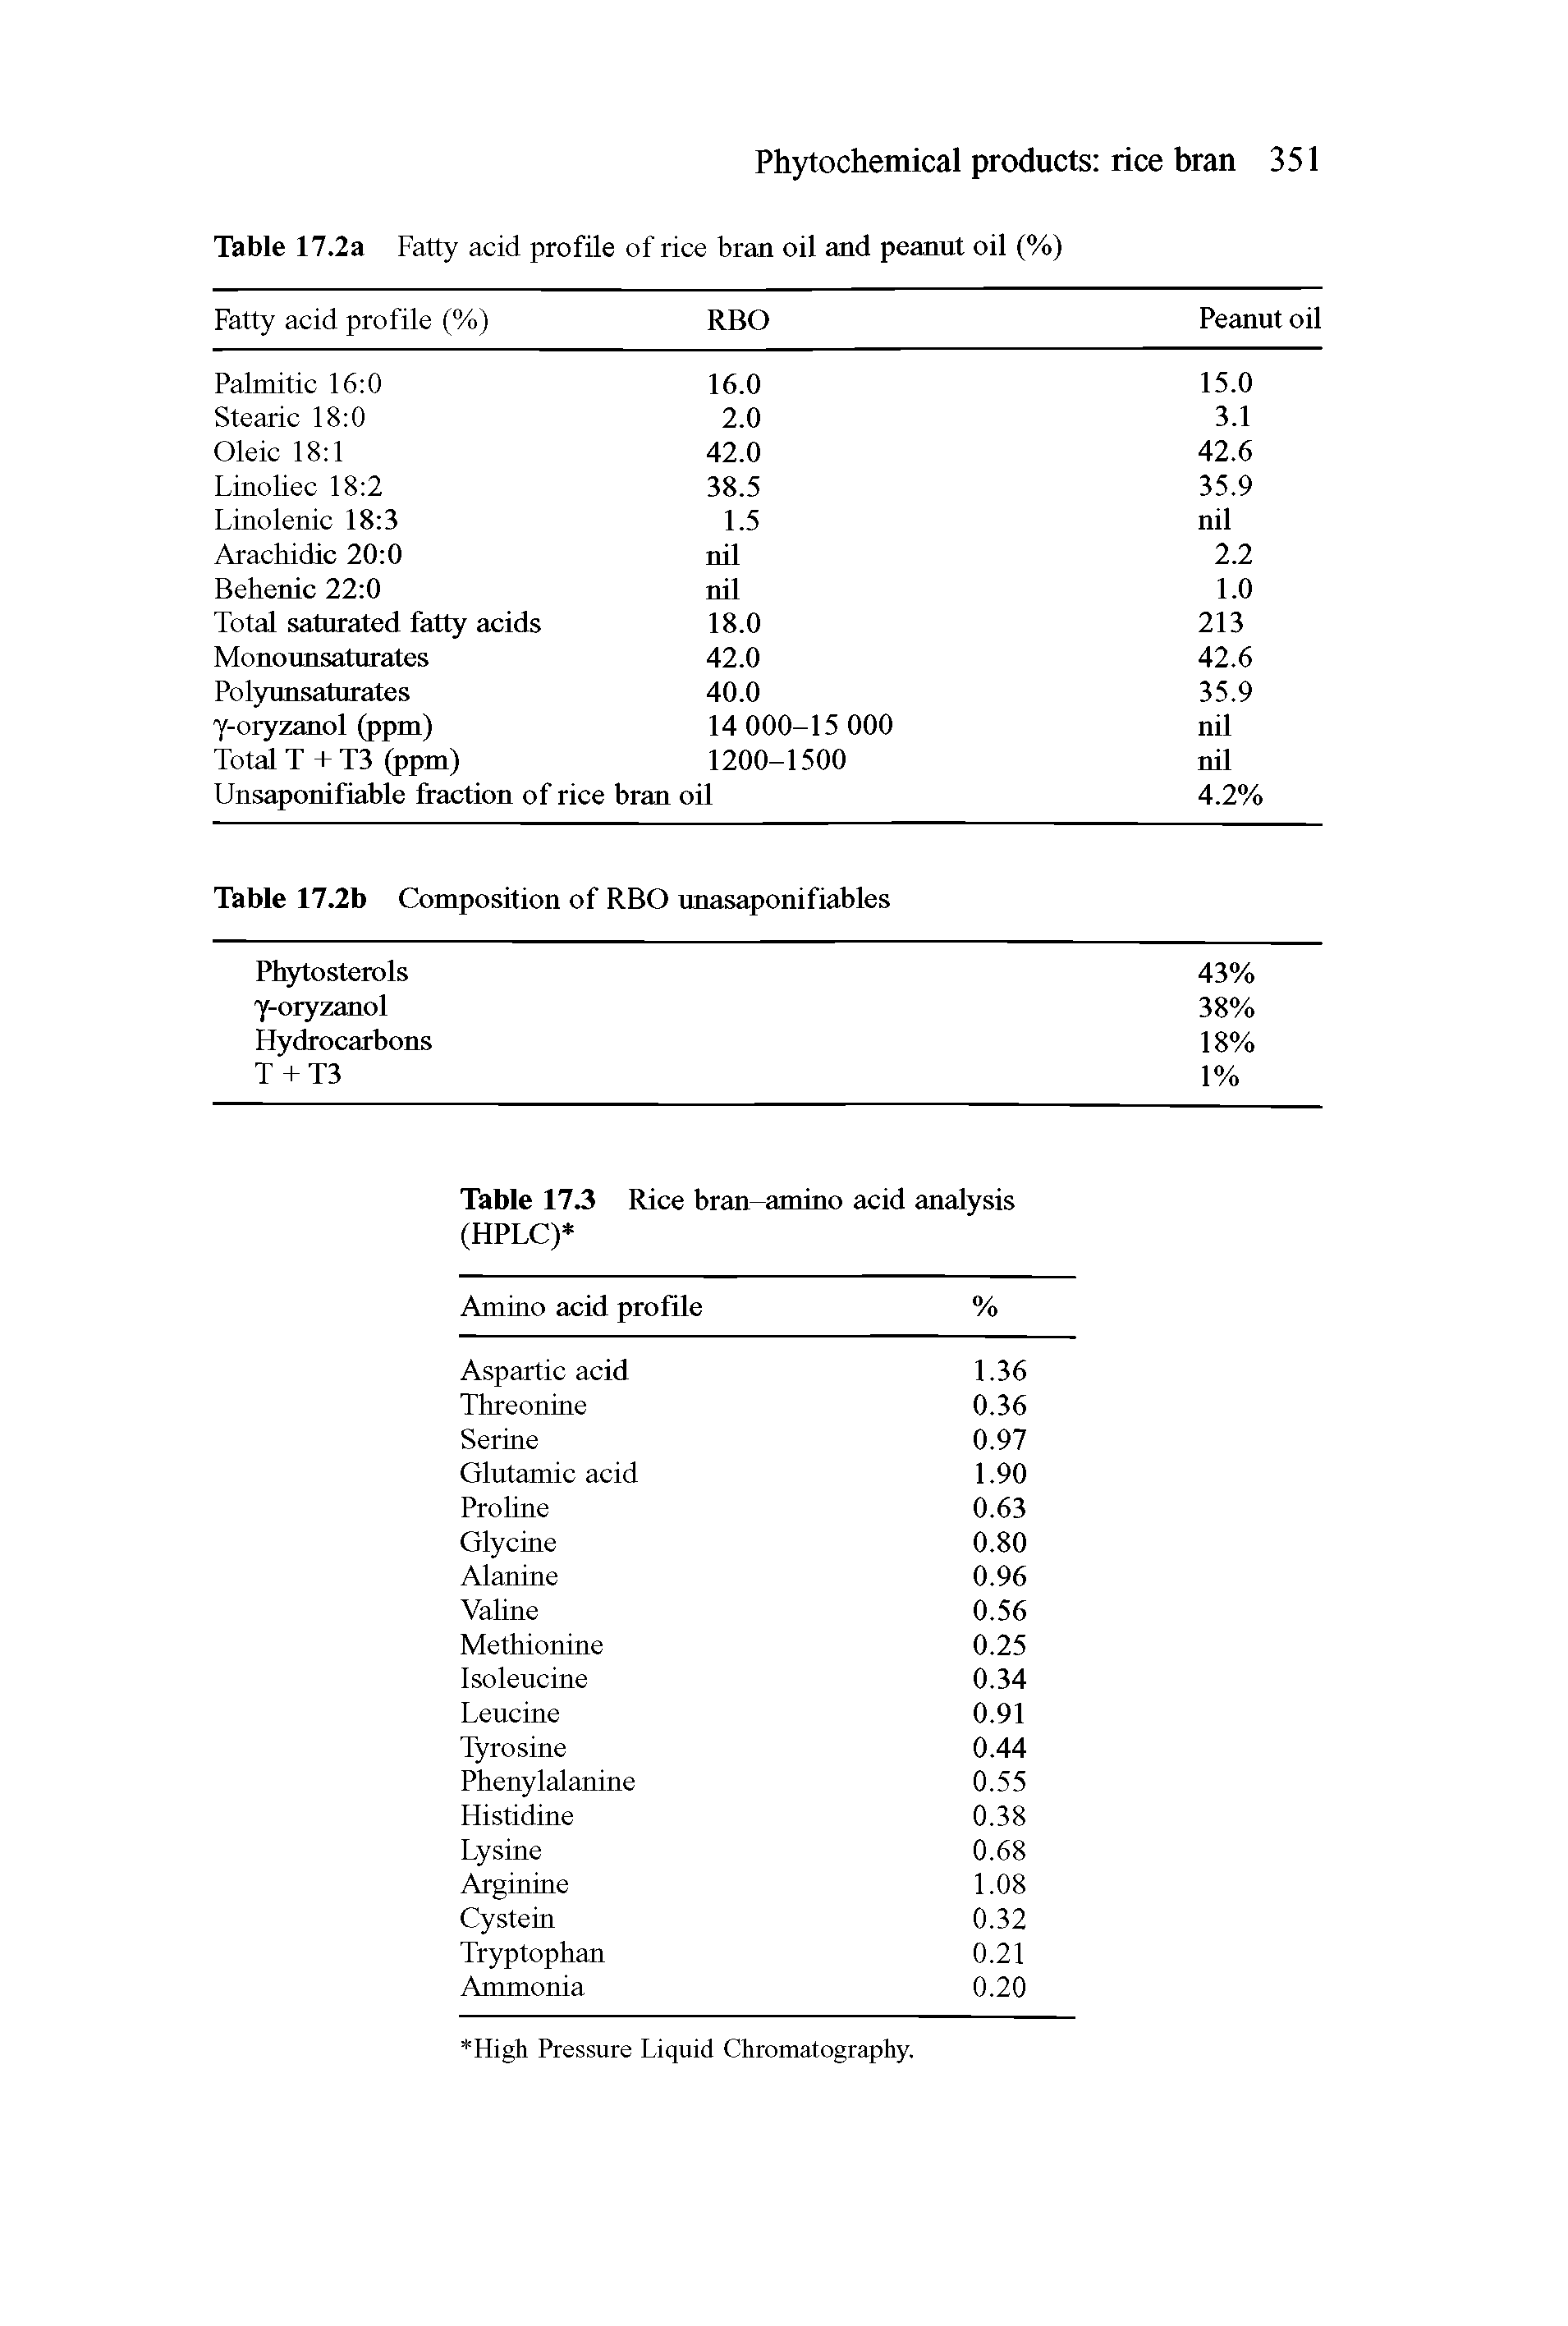 Table 17.2a Fatty acid profile of rice bran oil and peanut oil (%)...